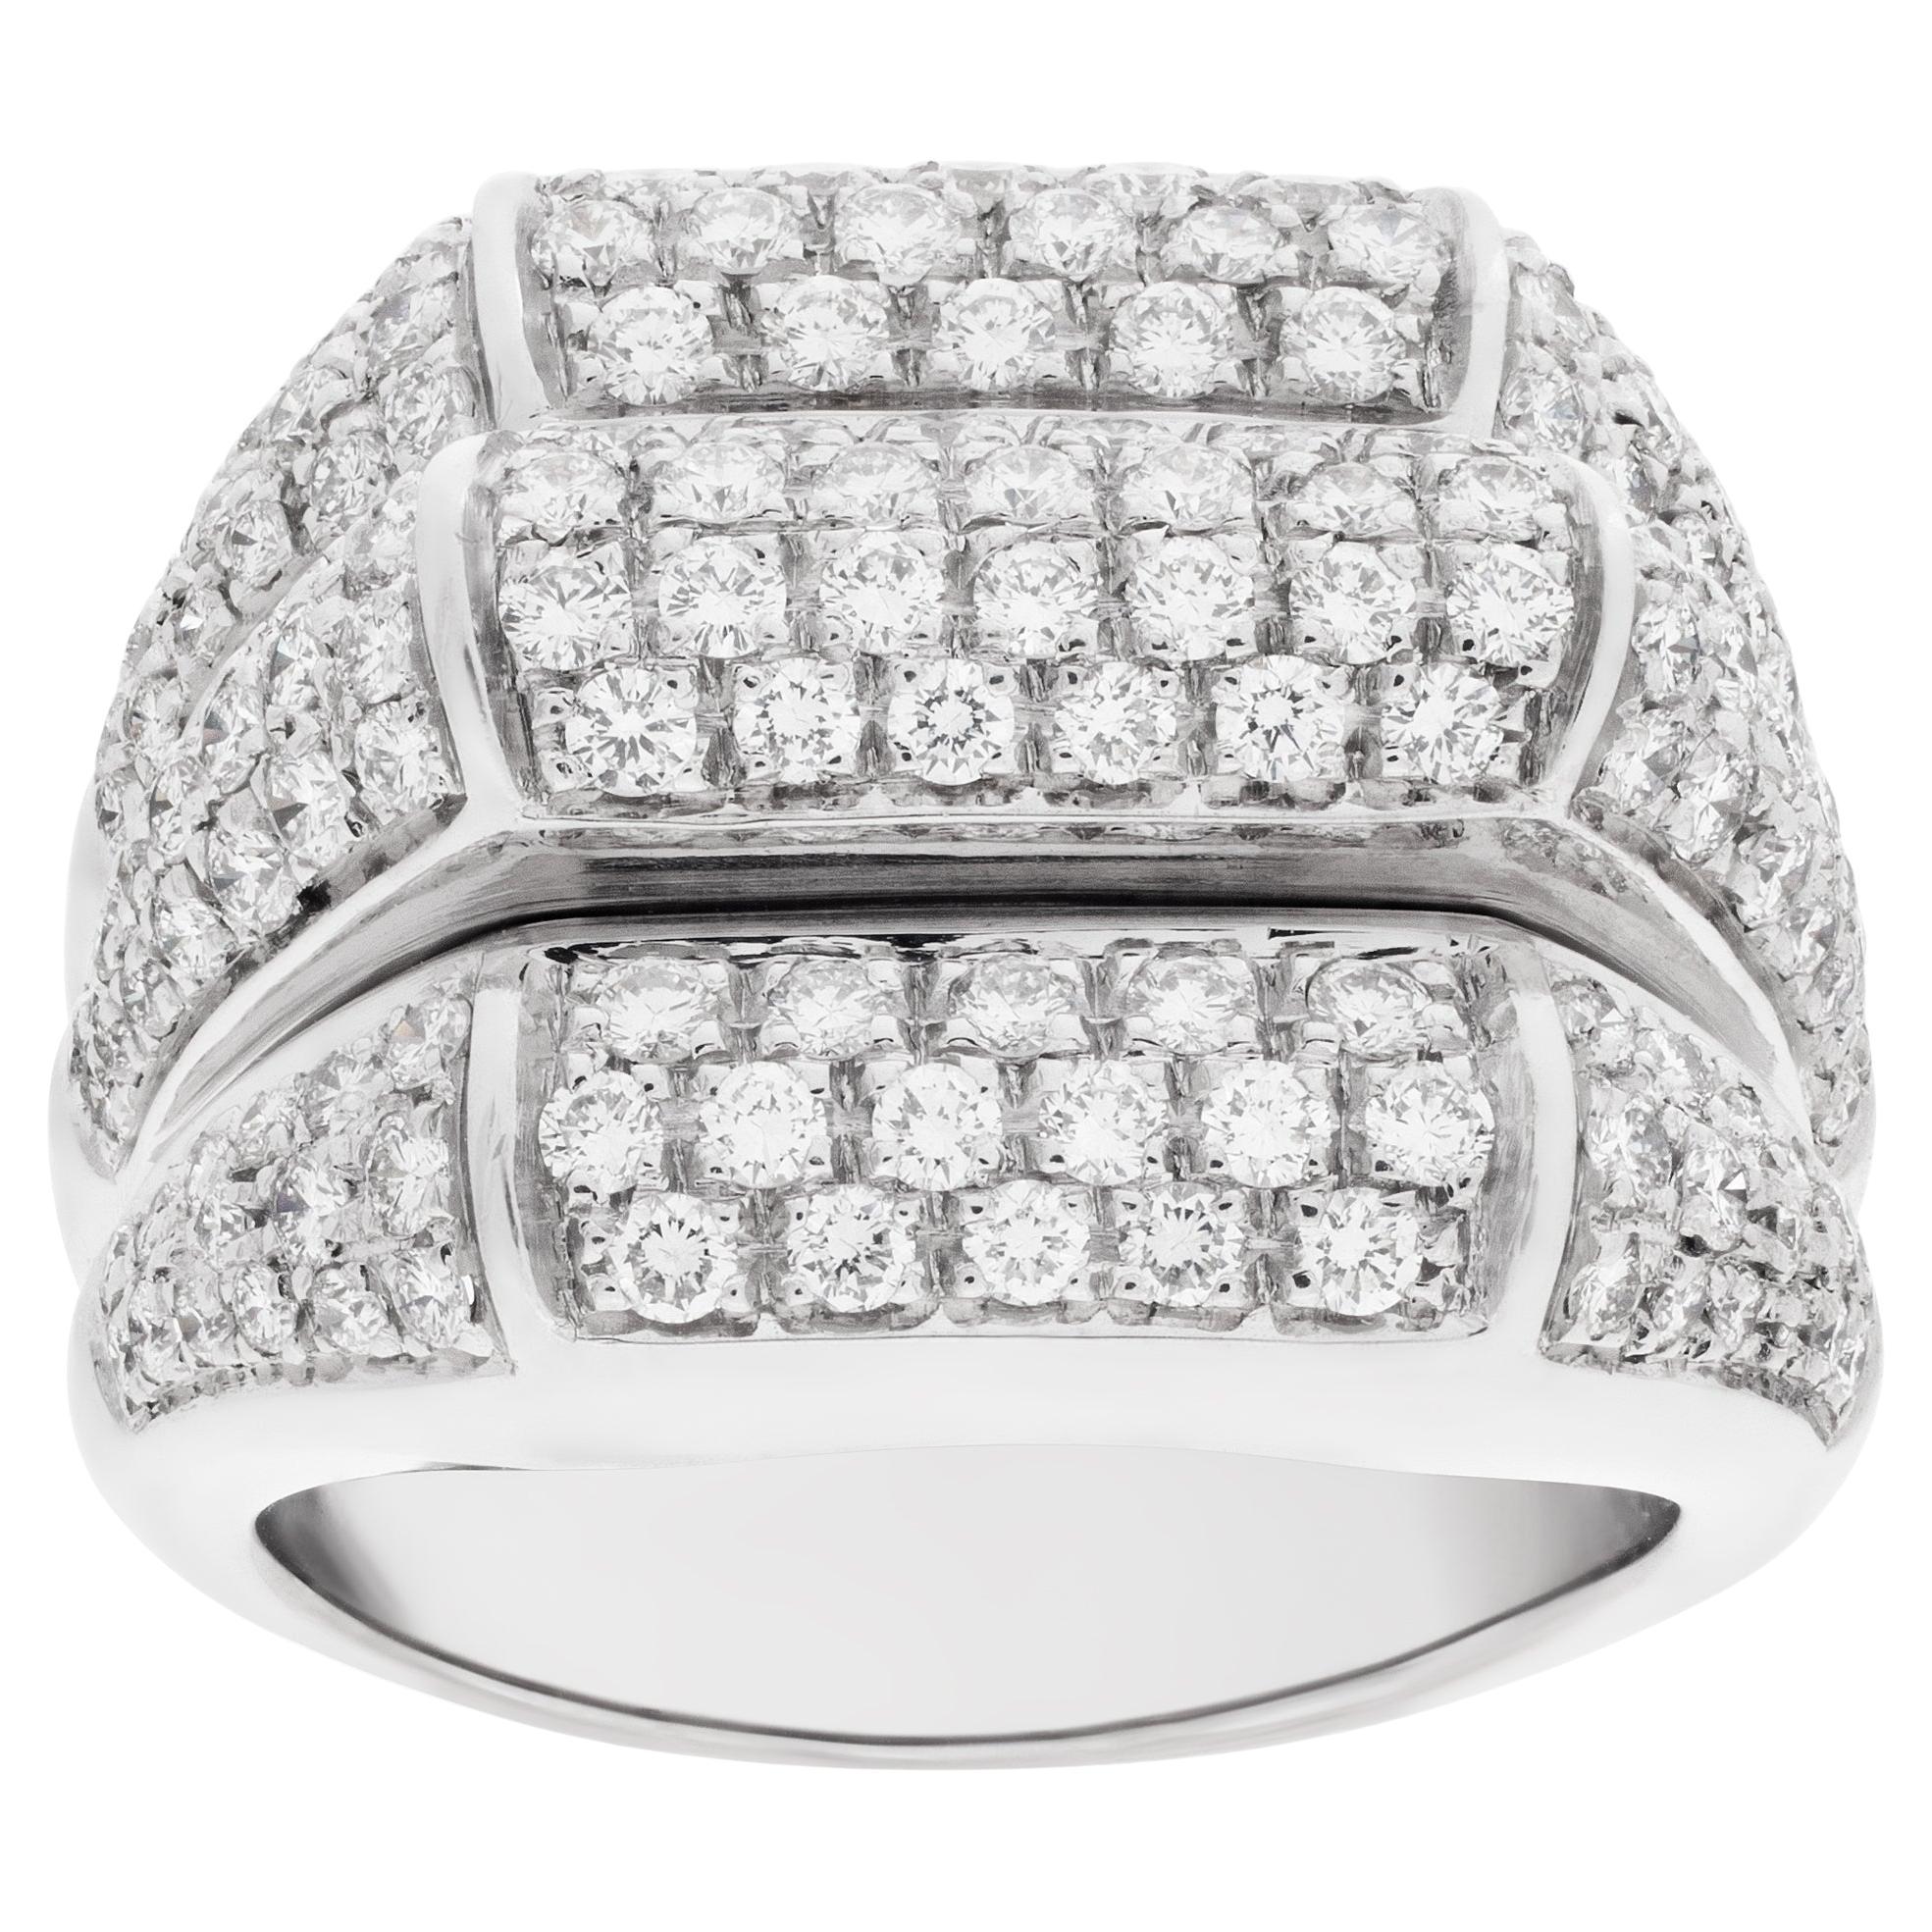 Three-Row Pave Diamond Ring in 18k White Gold